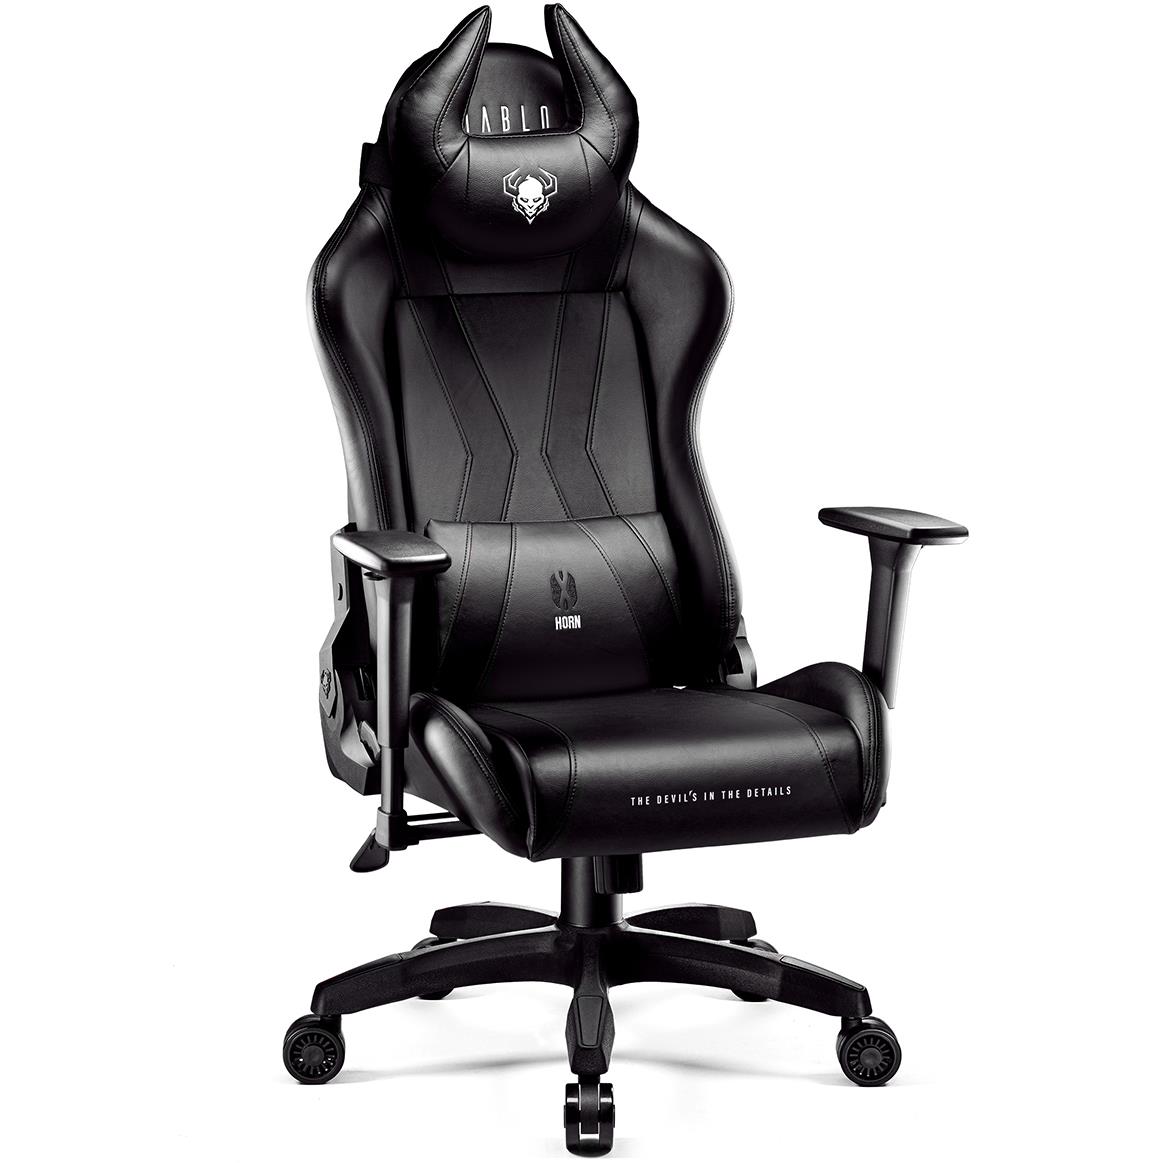 King Diablo X-Horn 2.0 kancelarijska stolica 73x59x133 cm crna